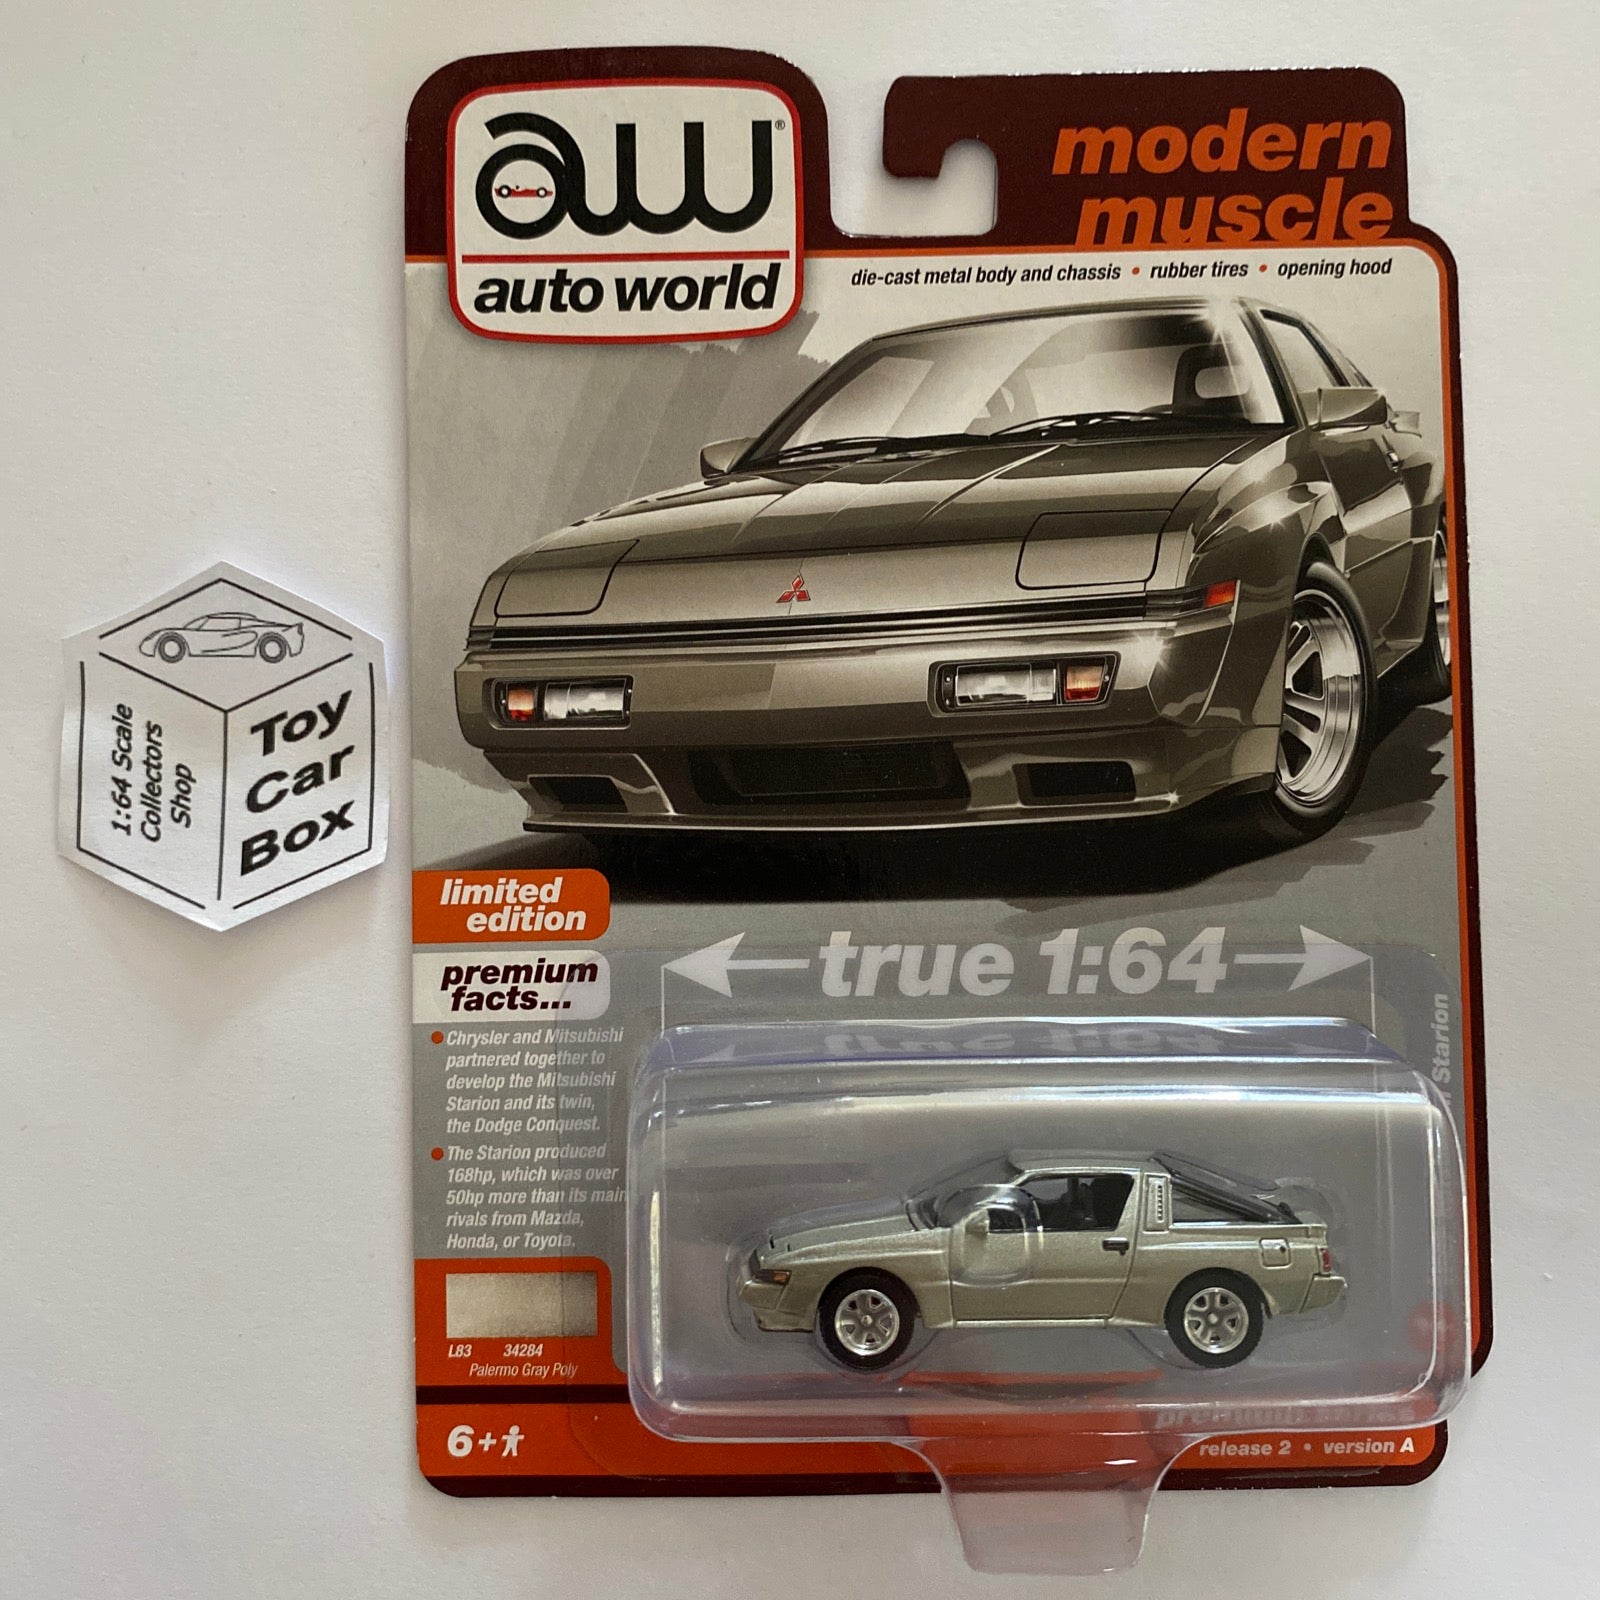 Auto World – Toy Car Box